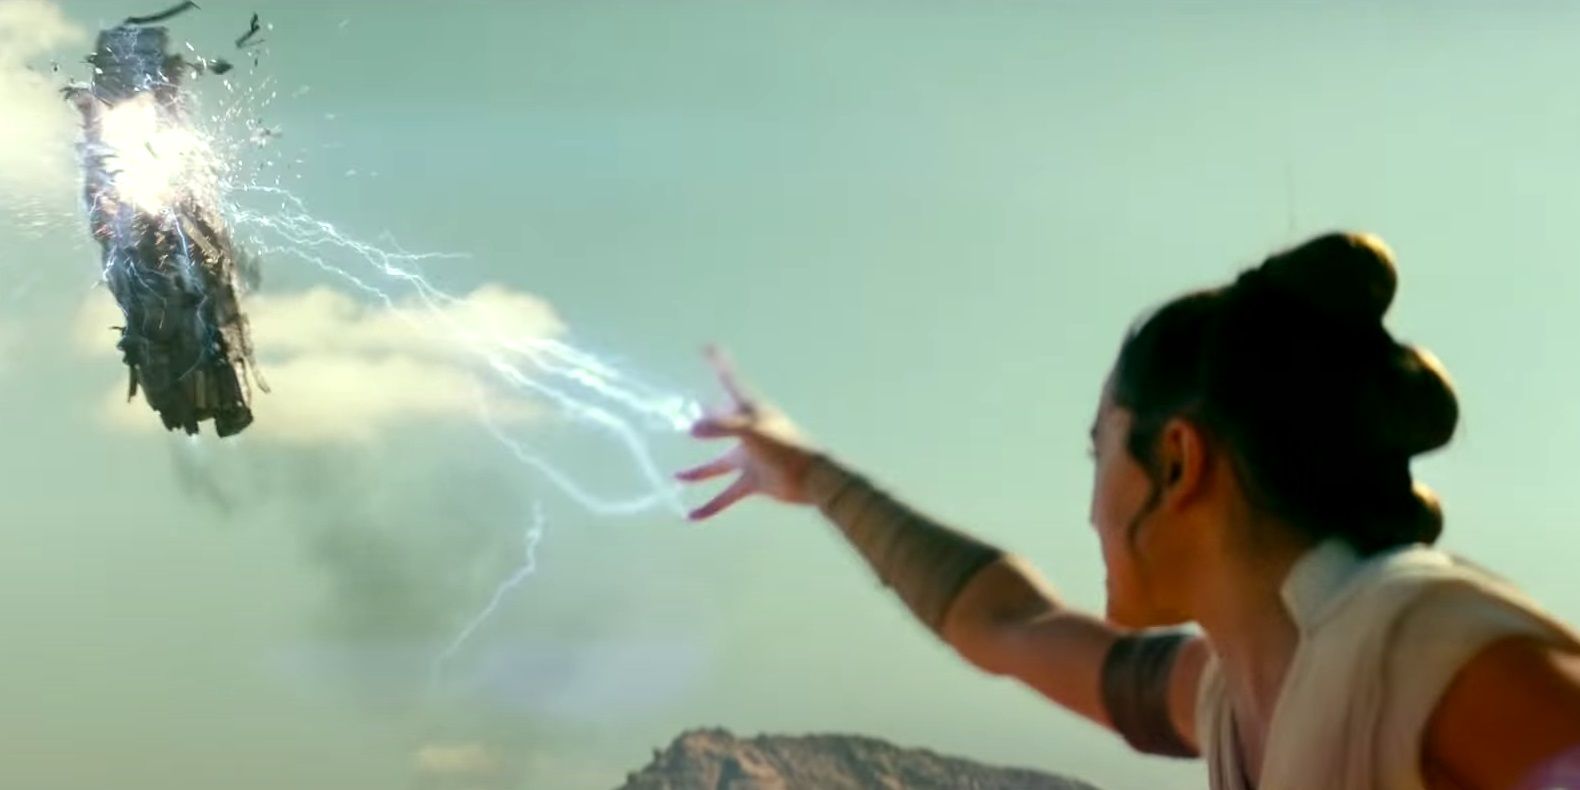 Rey uses Force lightning in The Rise of Skywalker